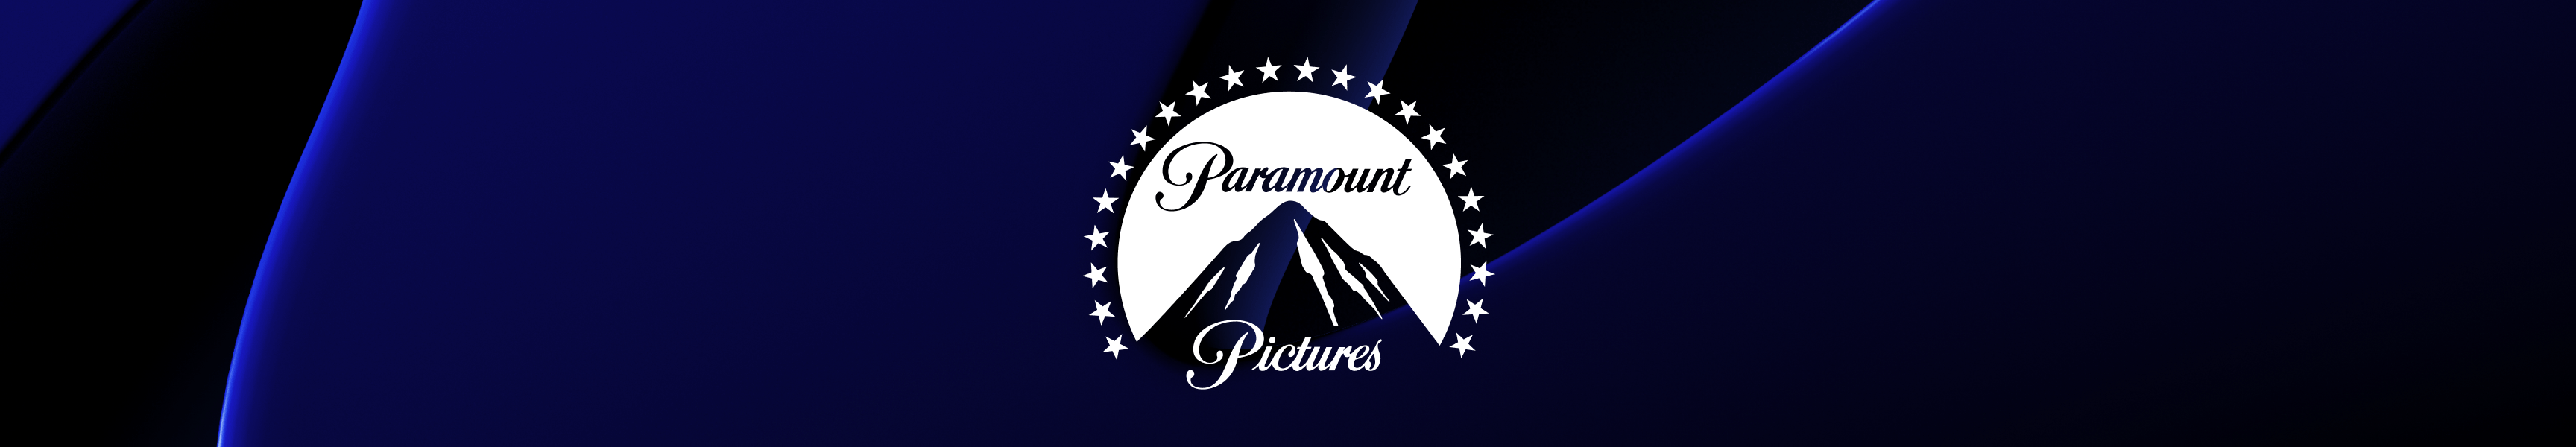 Paramount Pictures Trinkgeschirr